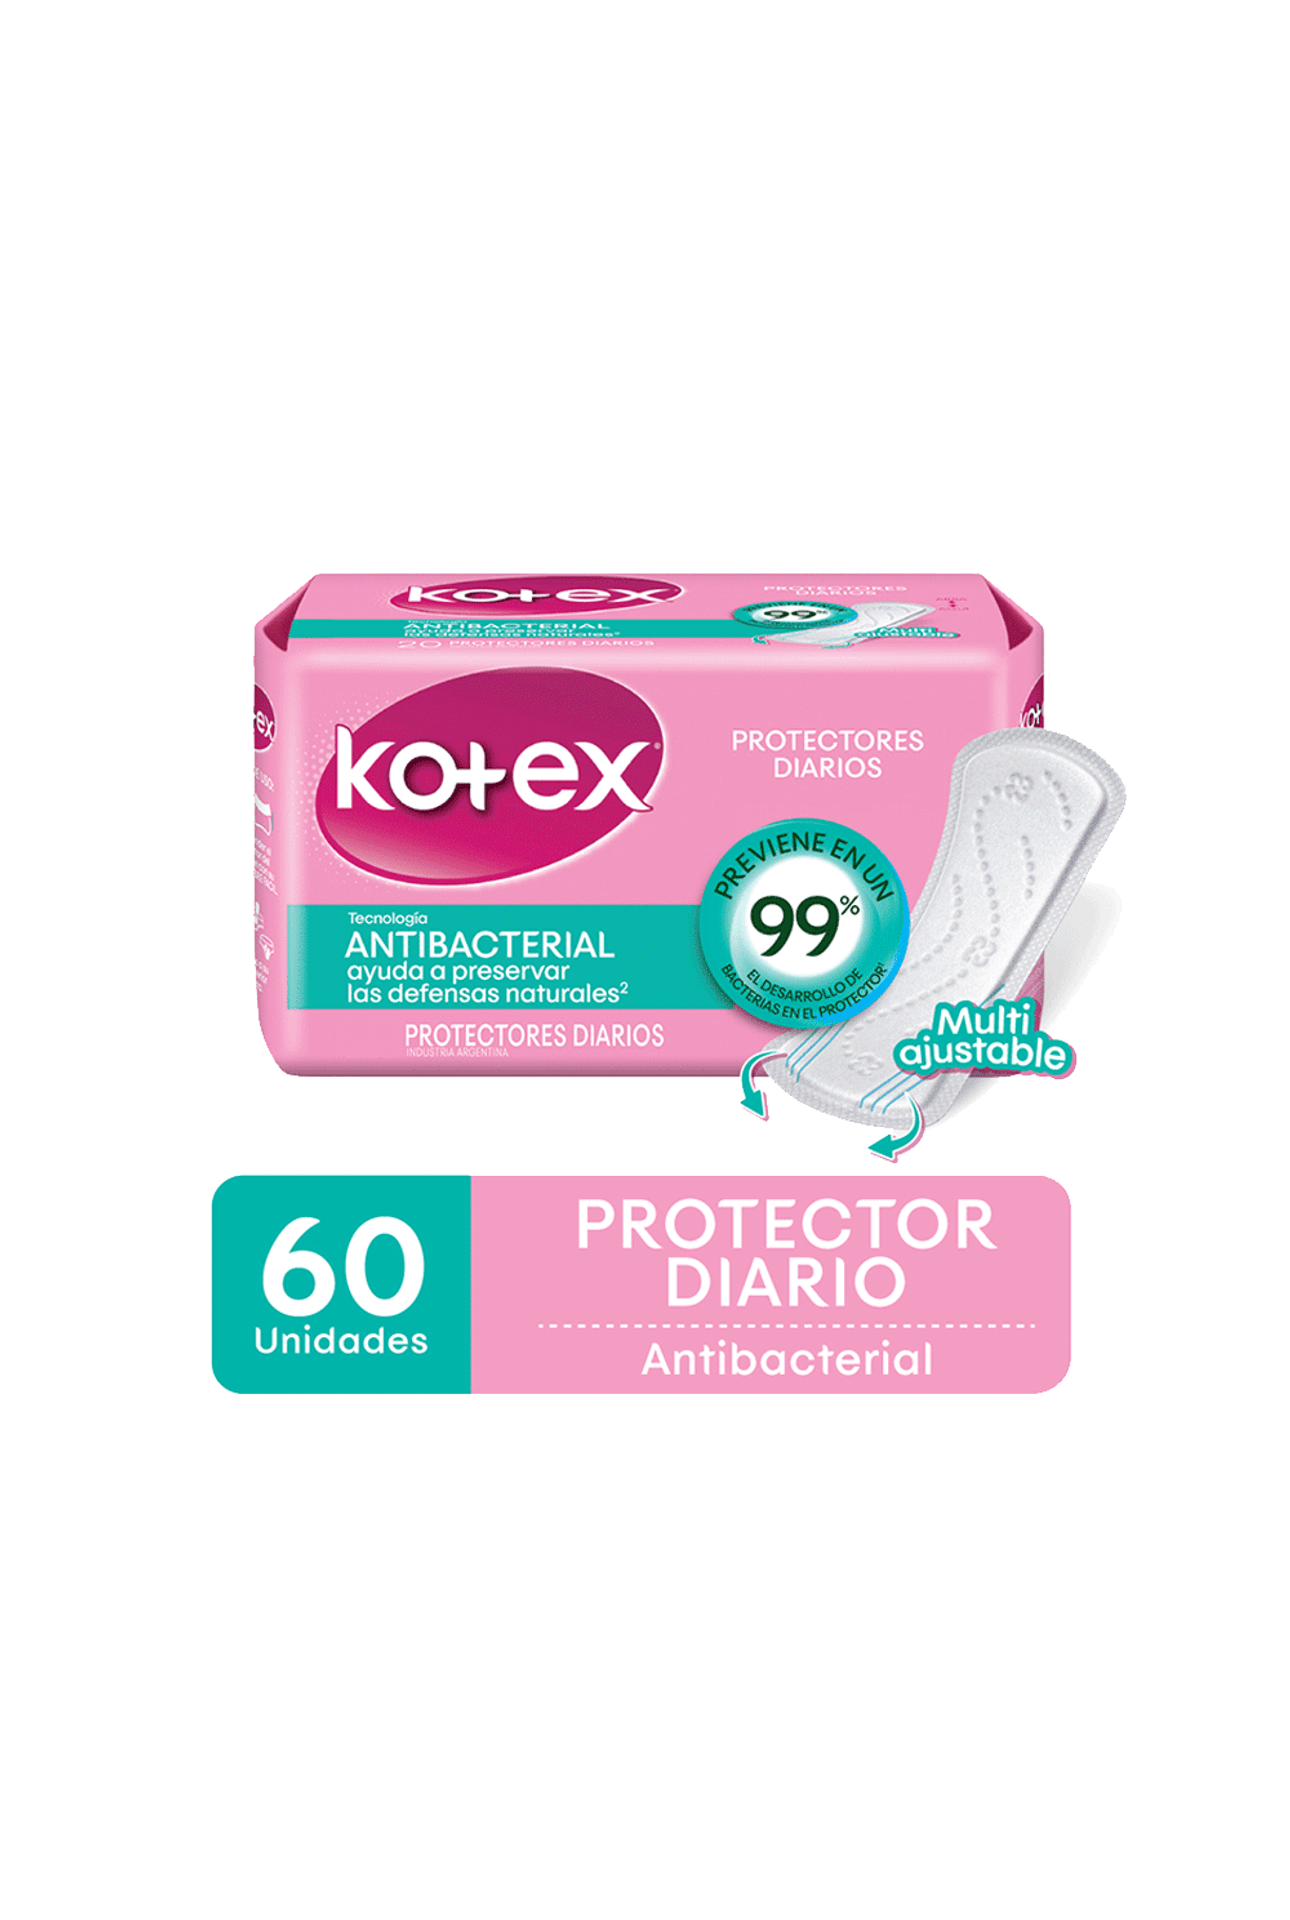 2119754_Kotex-Protector-Diario-Antibacterial-x-60-unid_img1